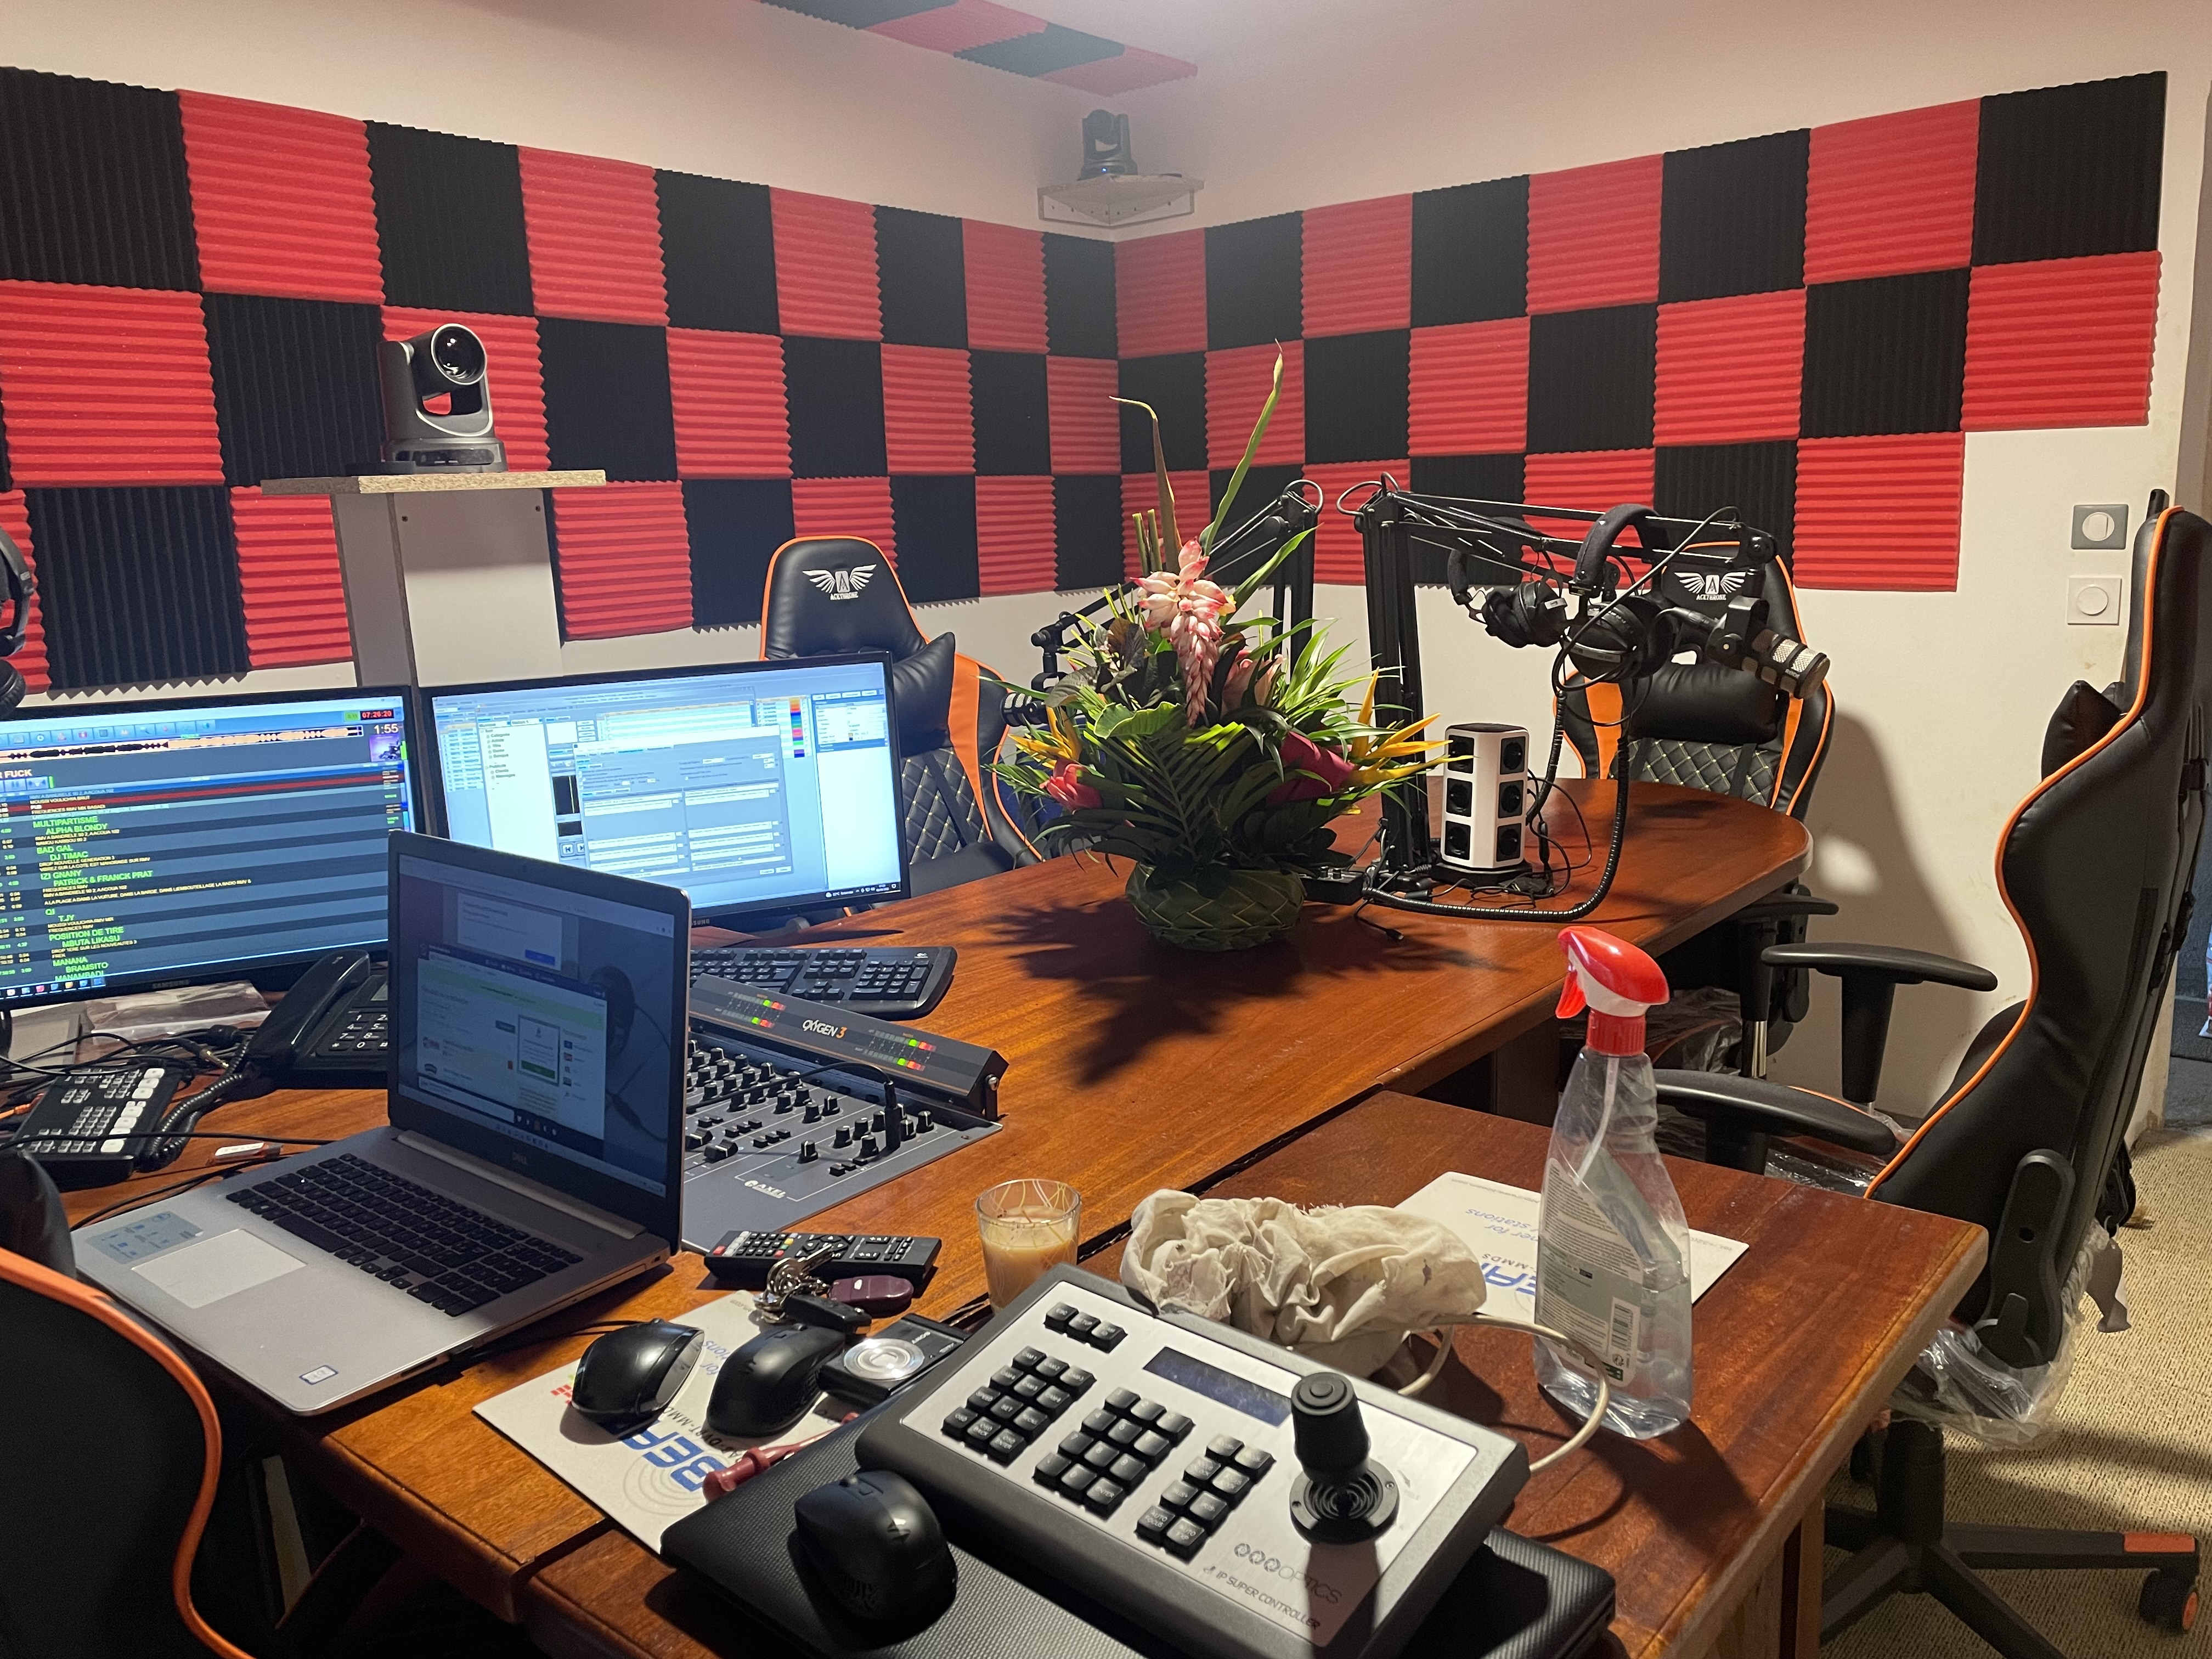 Studio RMV (Radio Miréréni Village)